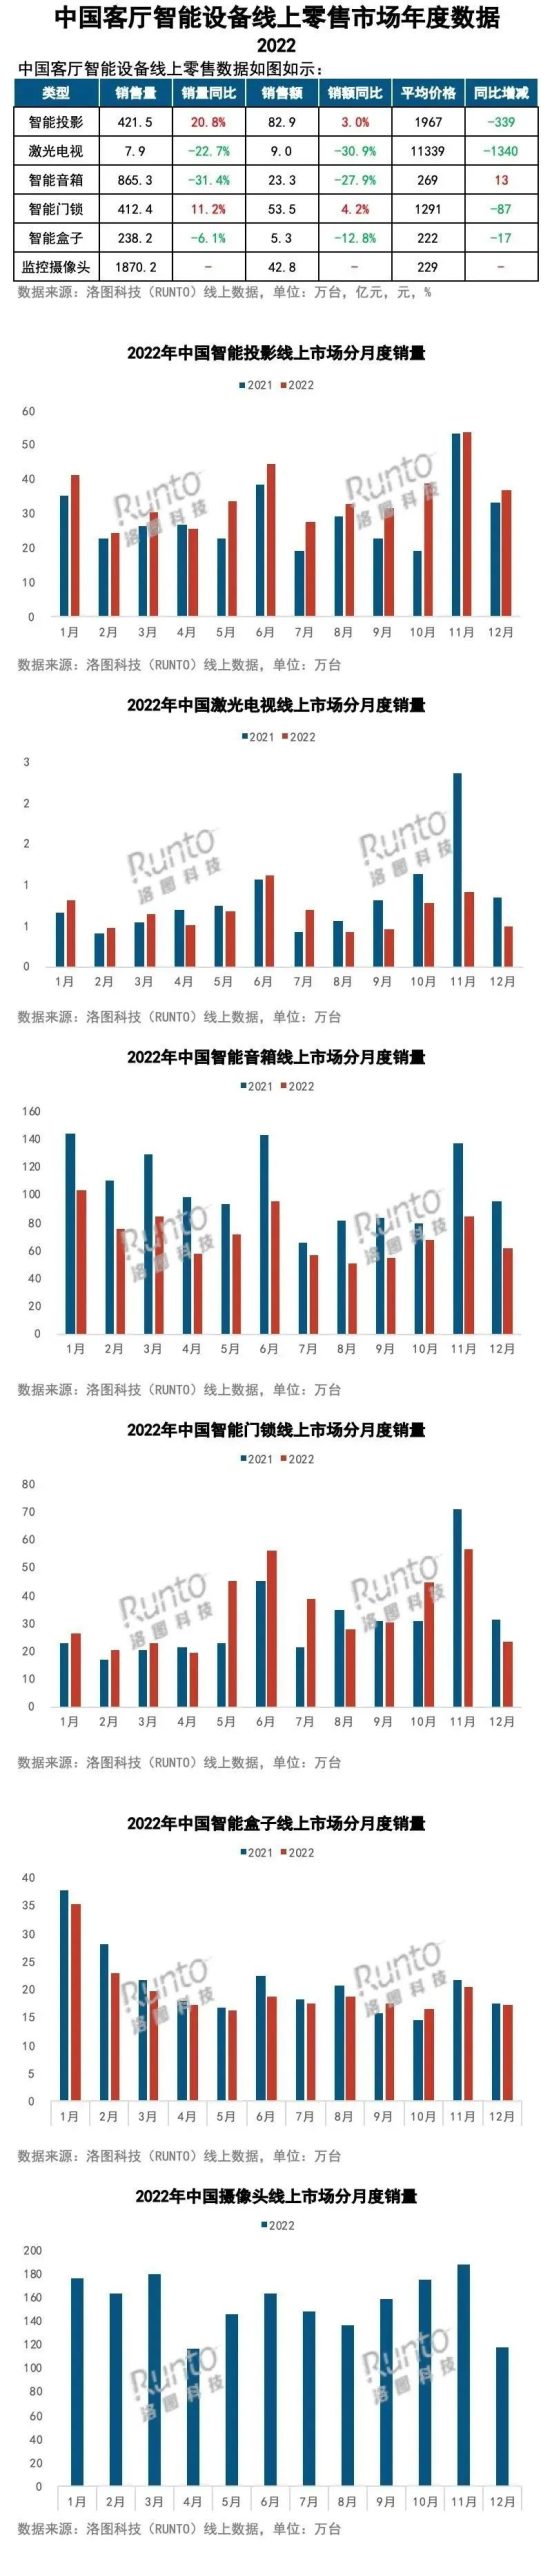 RUNTO：2022年中国六大客厅智能设备线上总销量3815万台